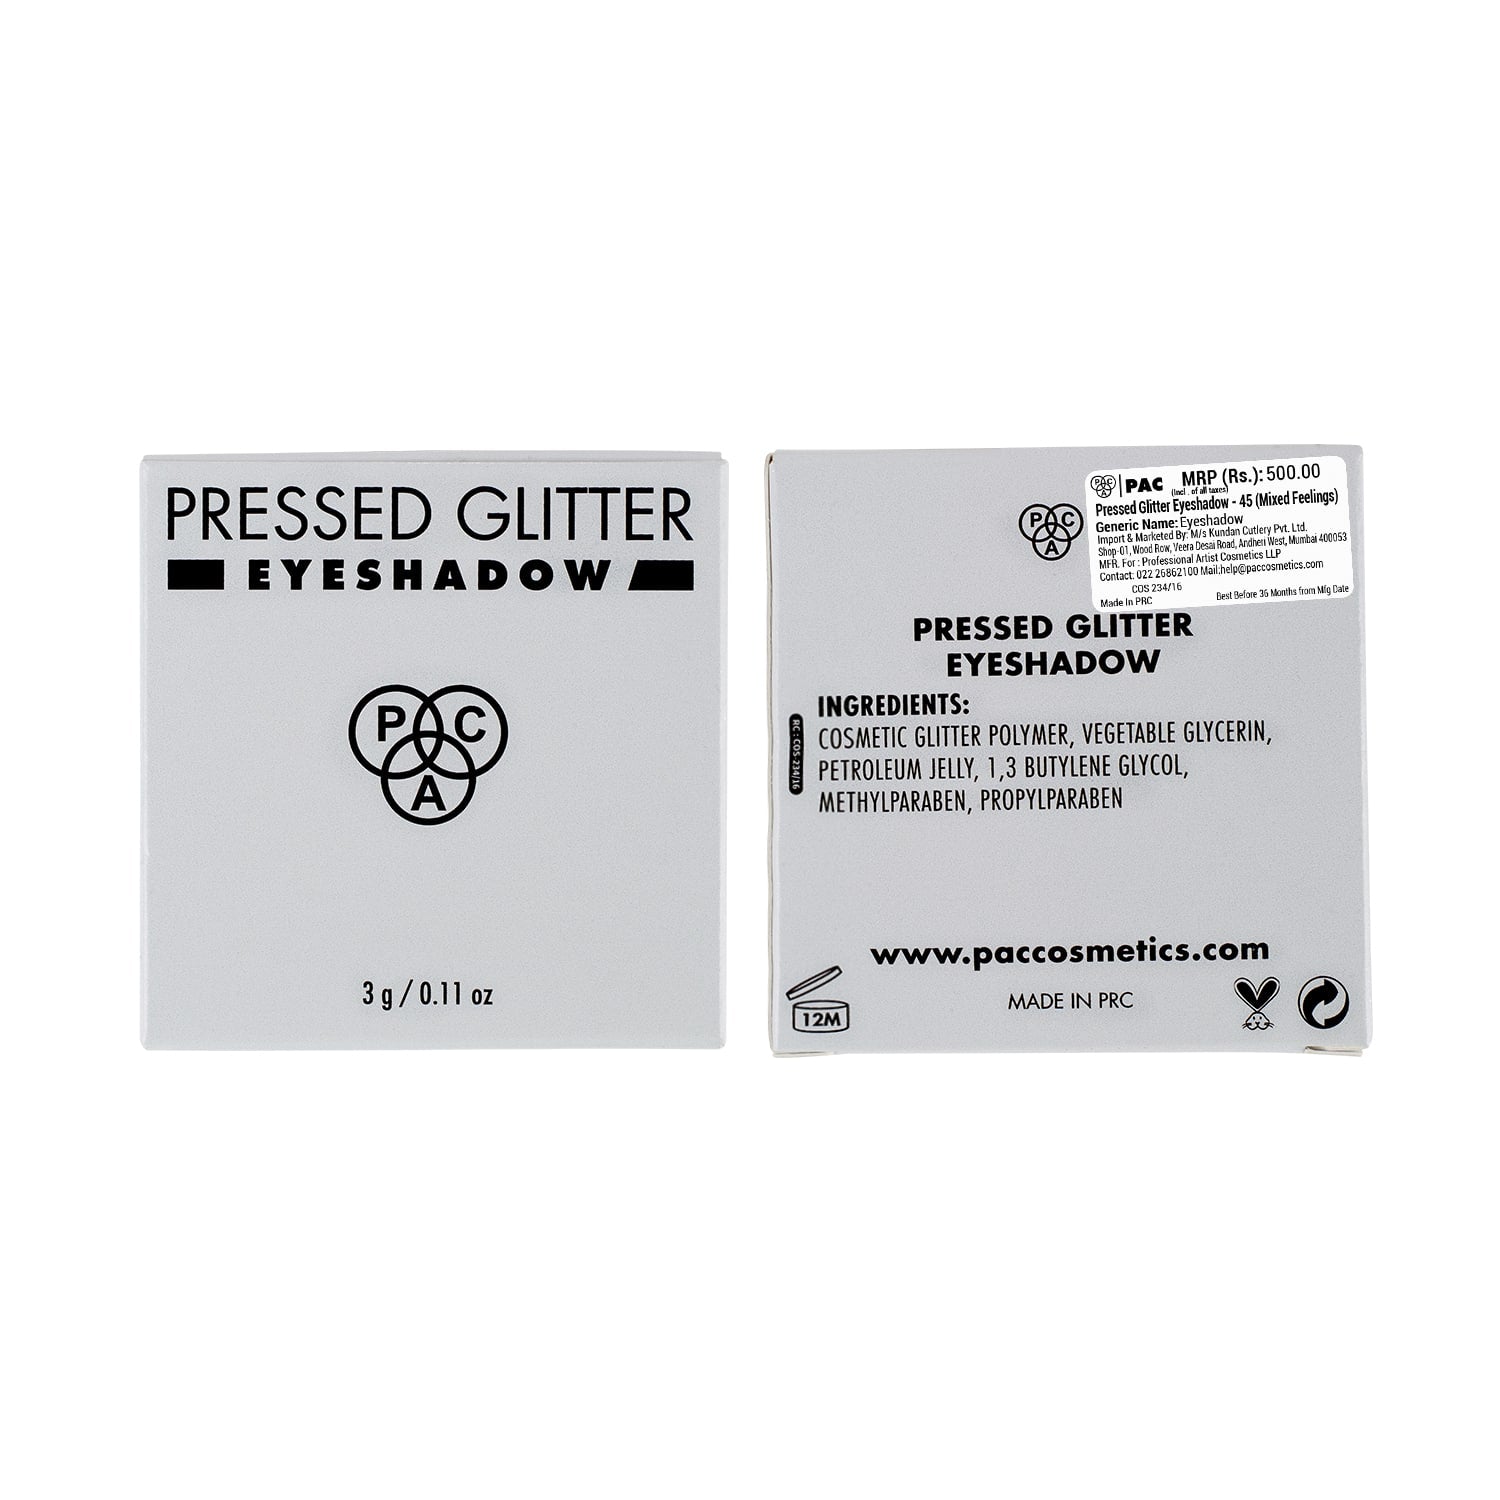 PAC Pressed Glitter Eyeshadow - 45 (Mixed Feelings) PAC